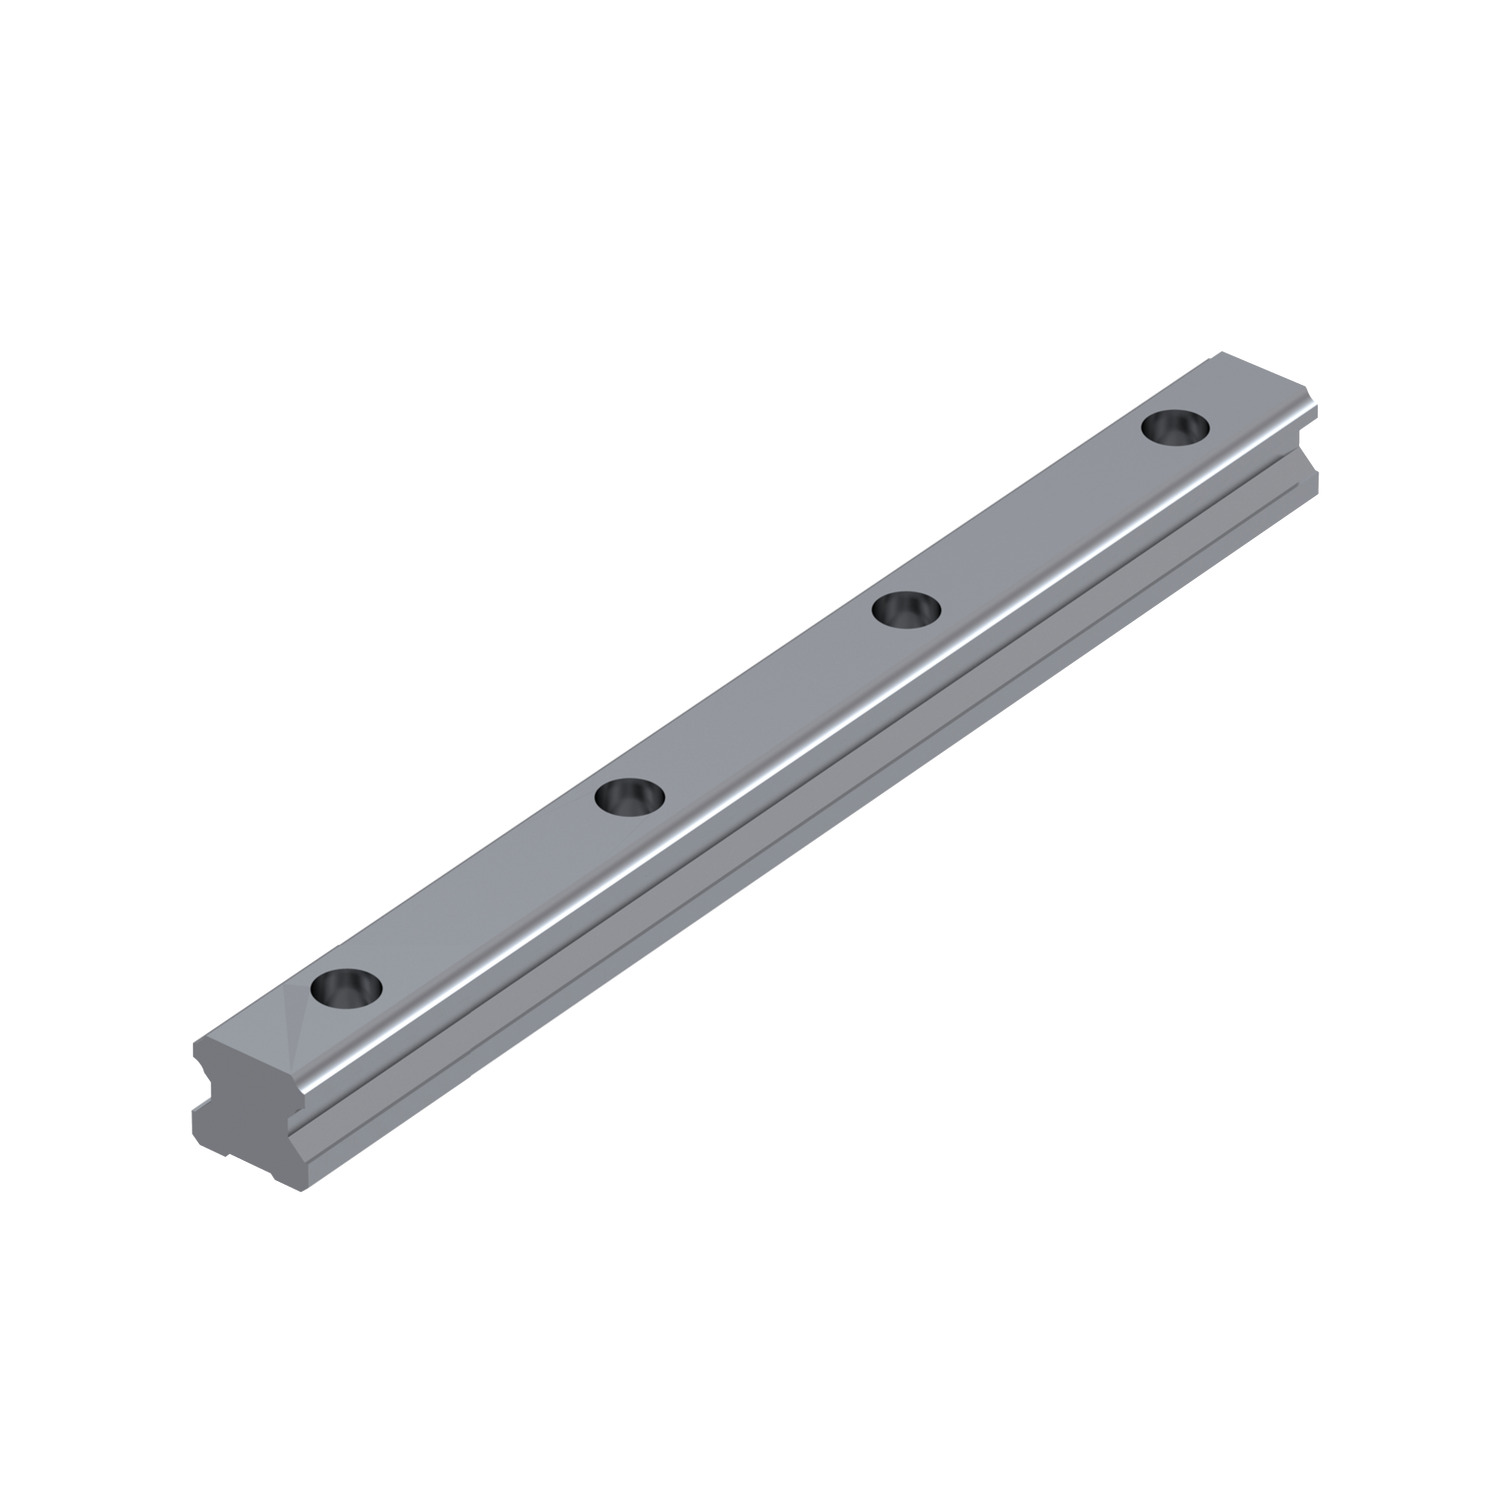 L1016.15 15mm Linear Guide Rail